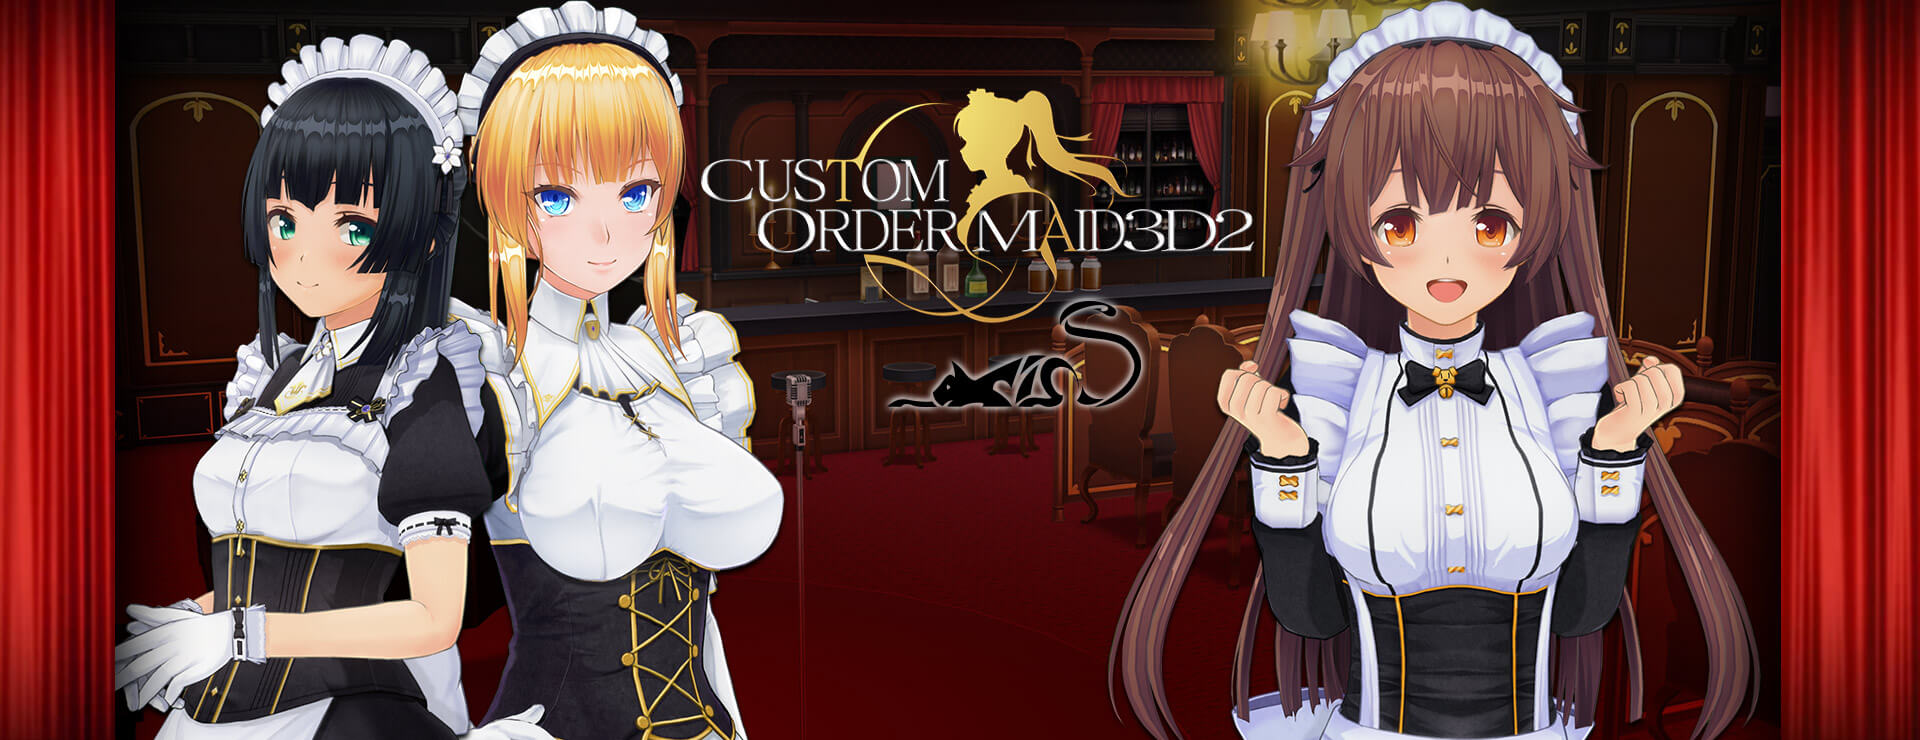 Custom Order Maid 3D2 GP 01 (DLC) - Action Adventure Game